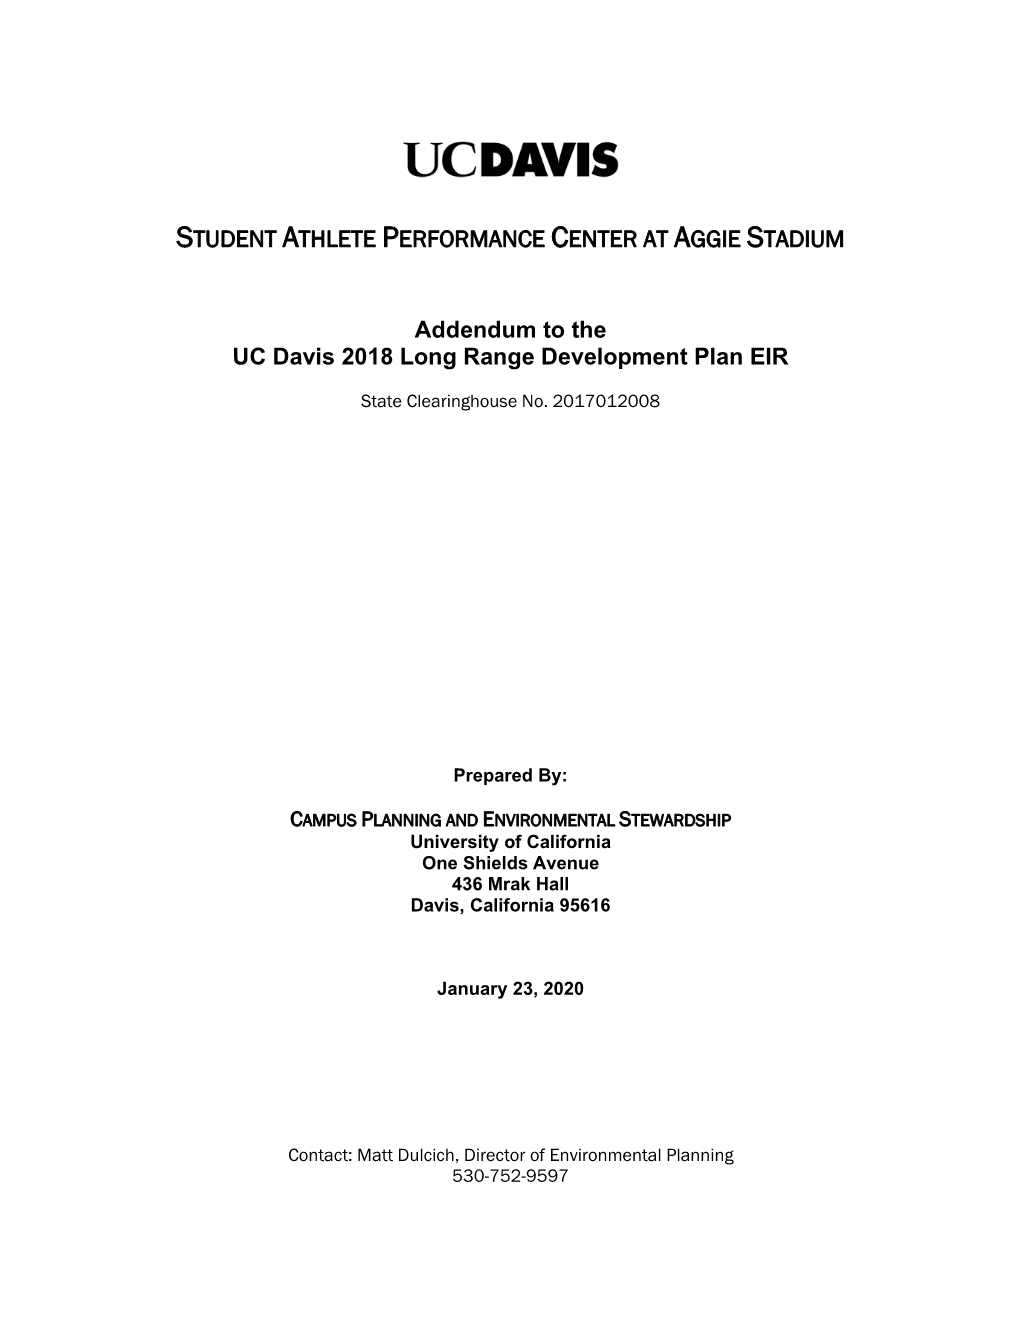 Addendum to the UC Davis 2018 Long Range Development Plan EIR